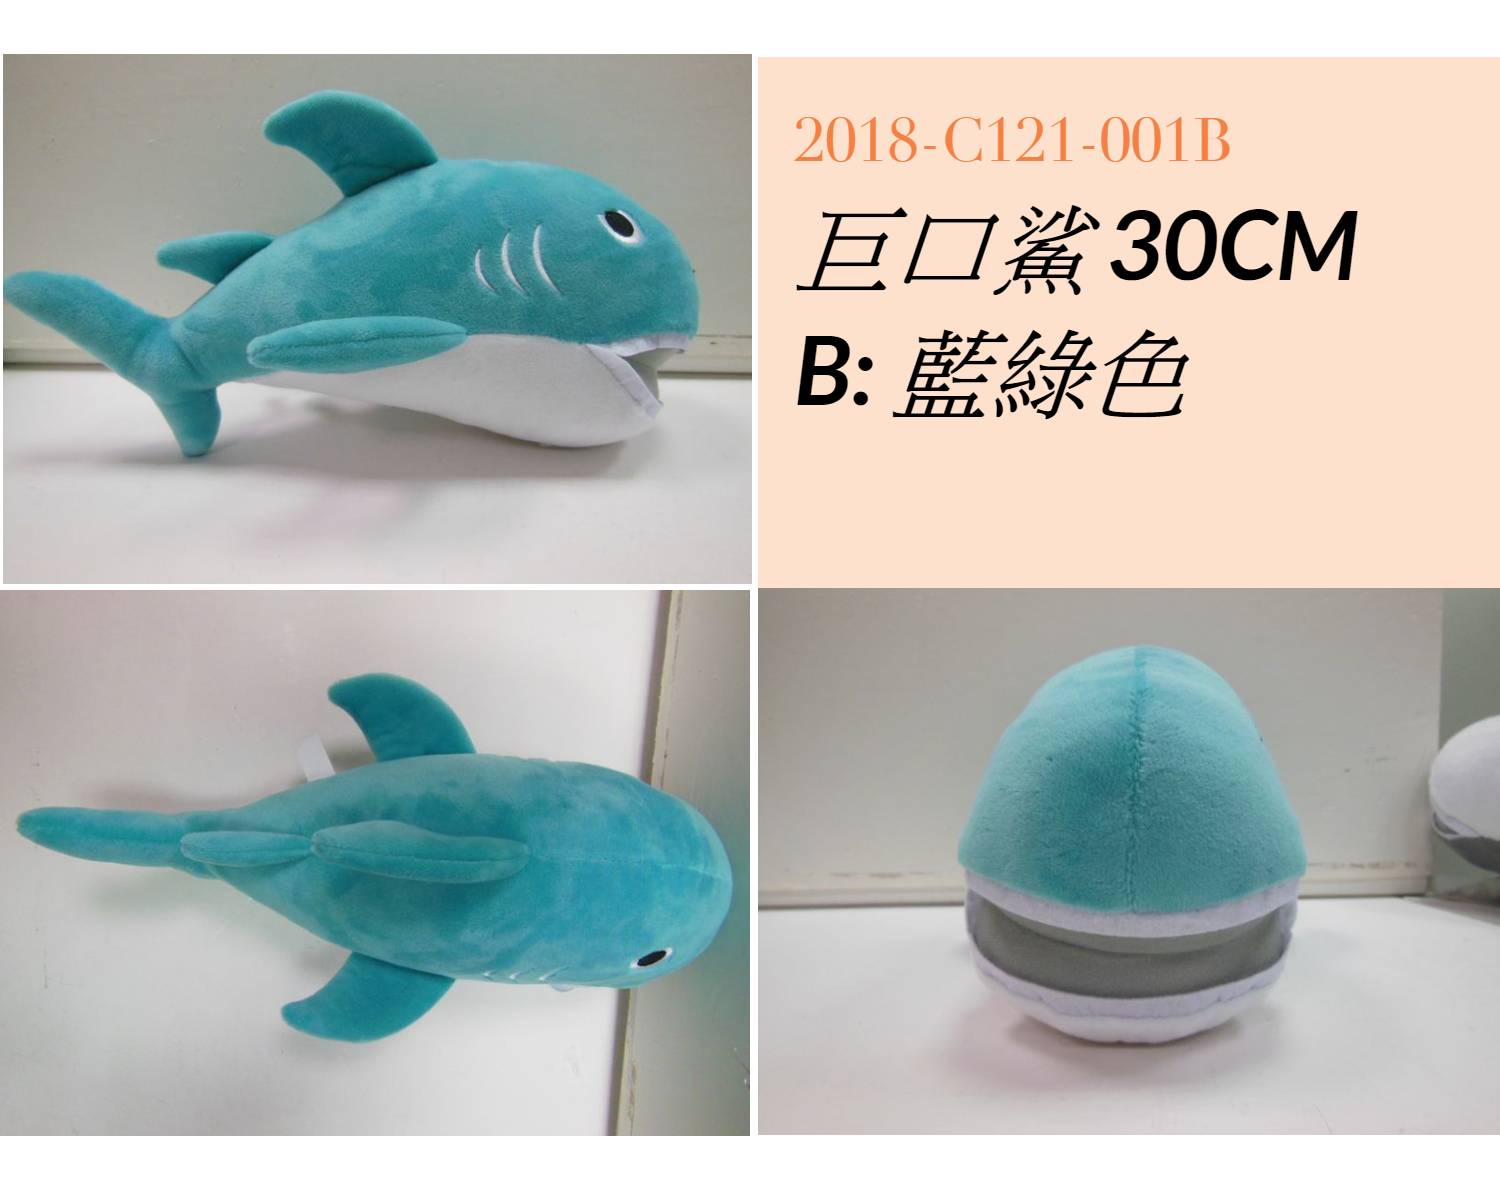 2018-C121-001B 巨口鯊 30CM B: 藍綠色